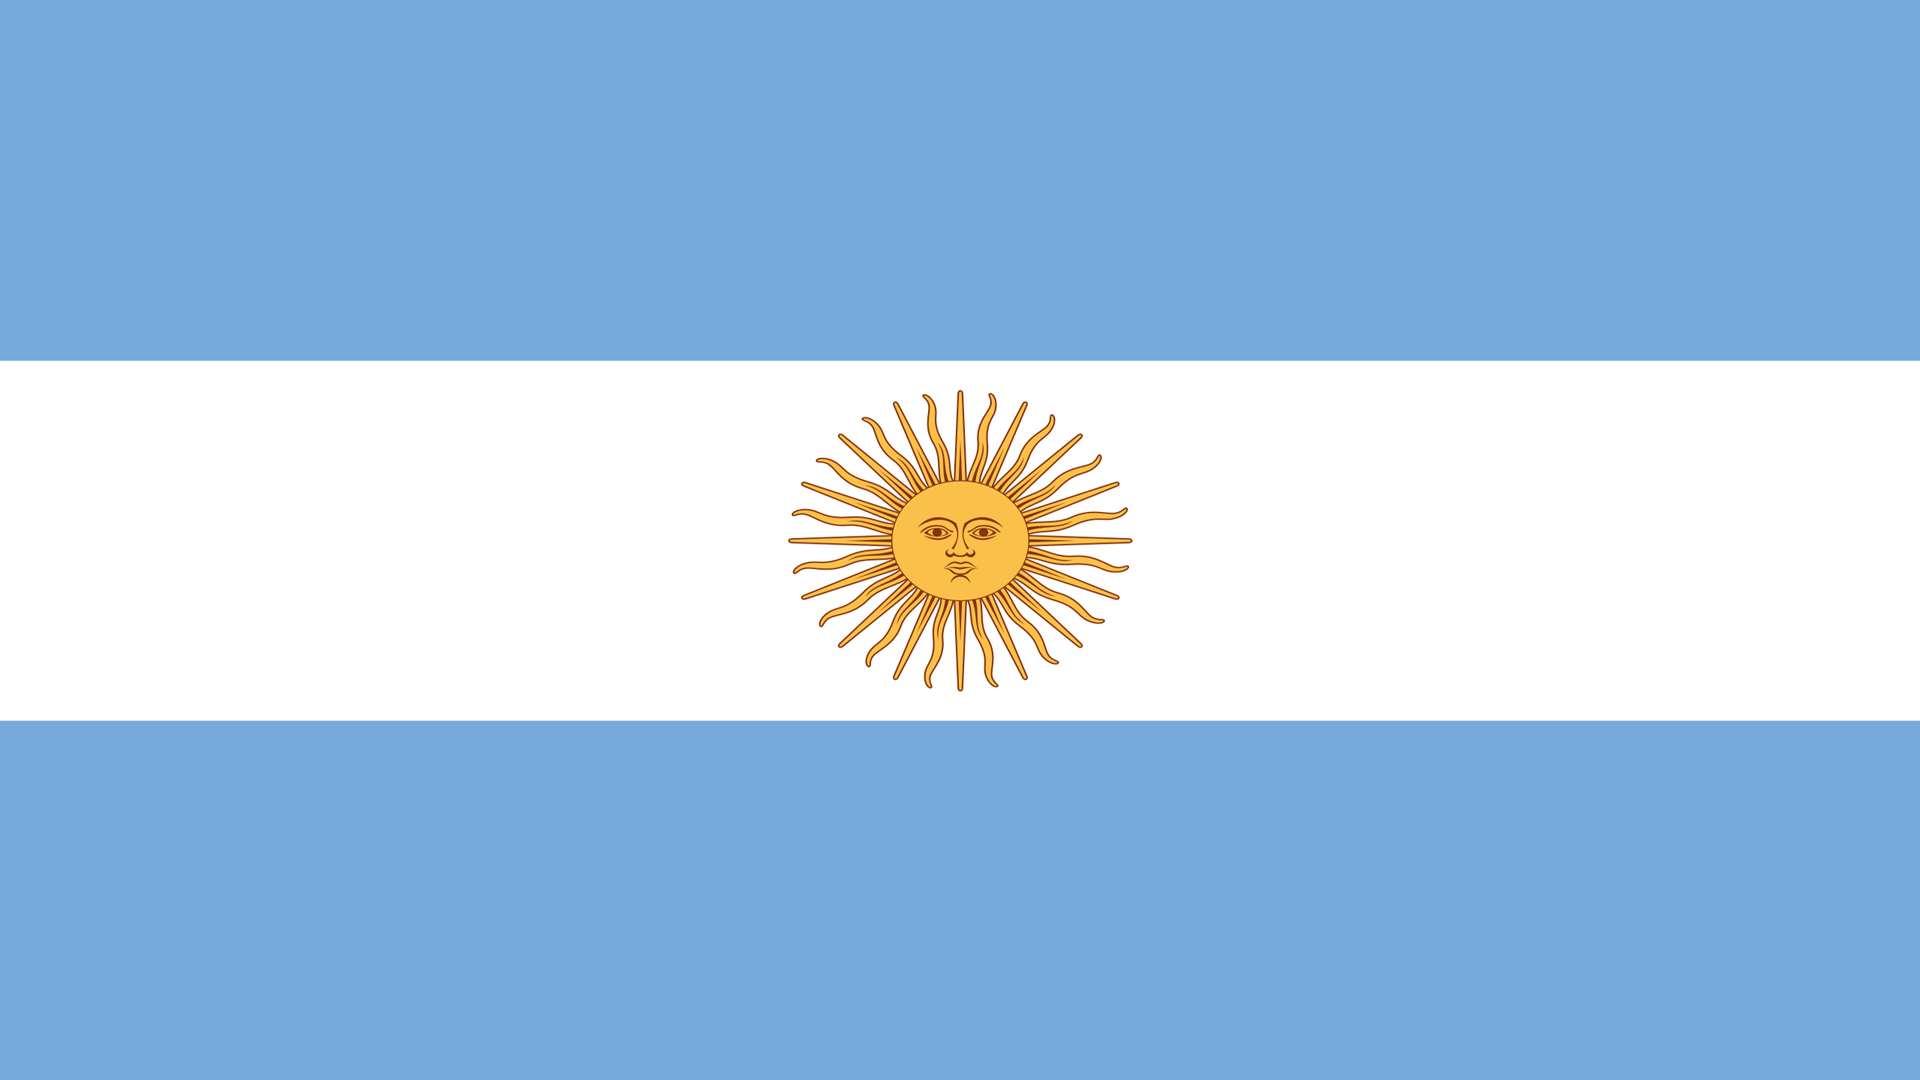 Argentina Flag - Wallpaper, High Definition, High Quality, Widescreen